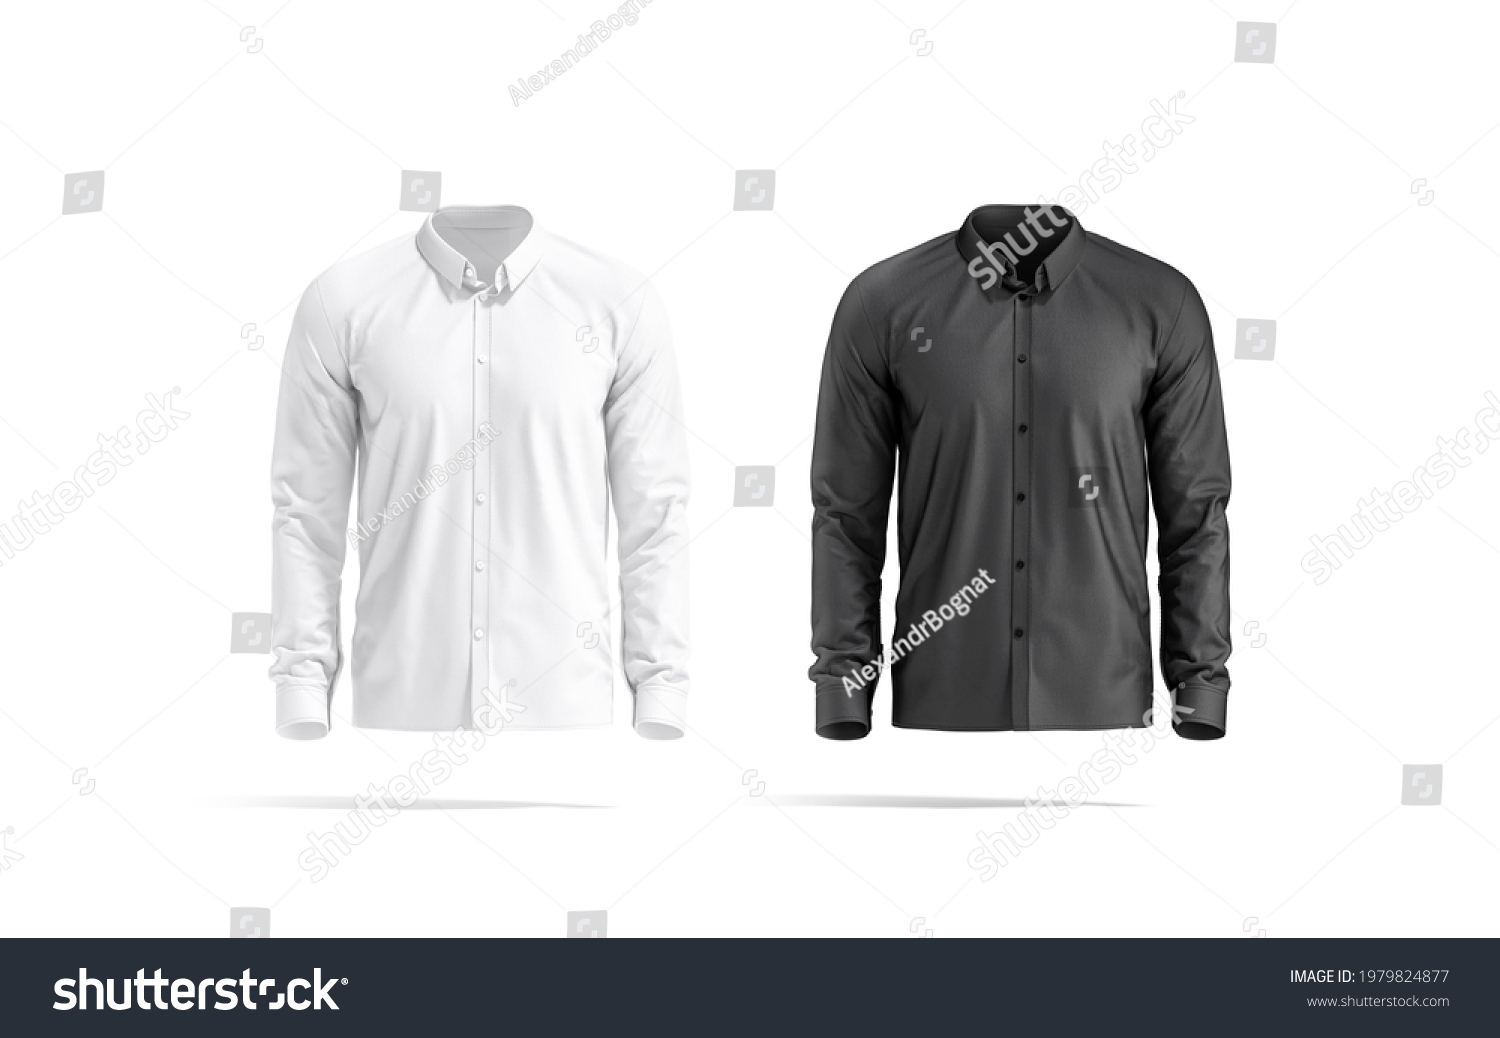 Blank Black White Classic Shirt Mockup Stock Illustration 1979824877 ...